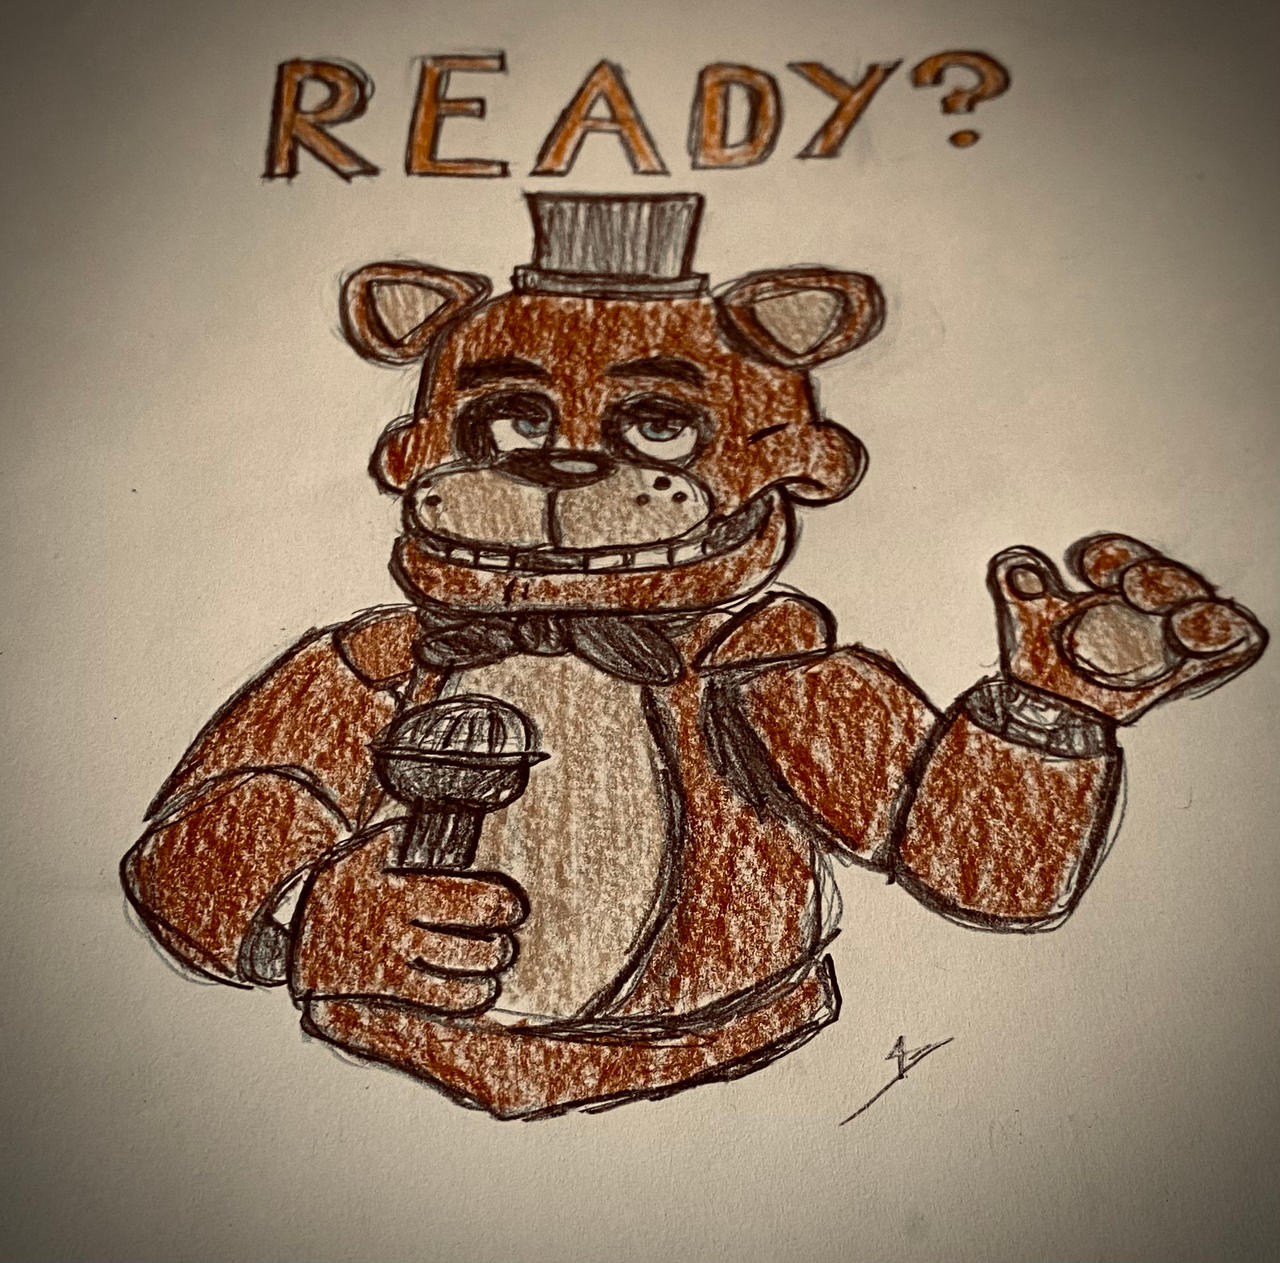 Are you ready to Random!?